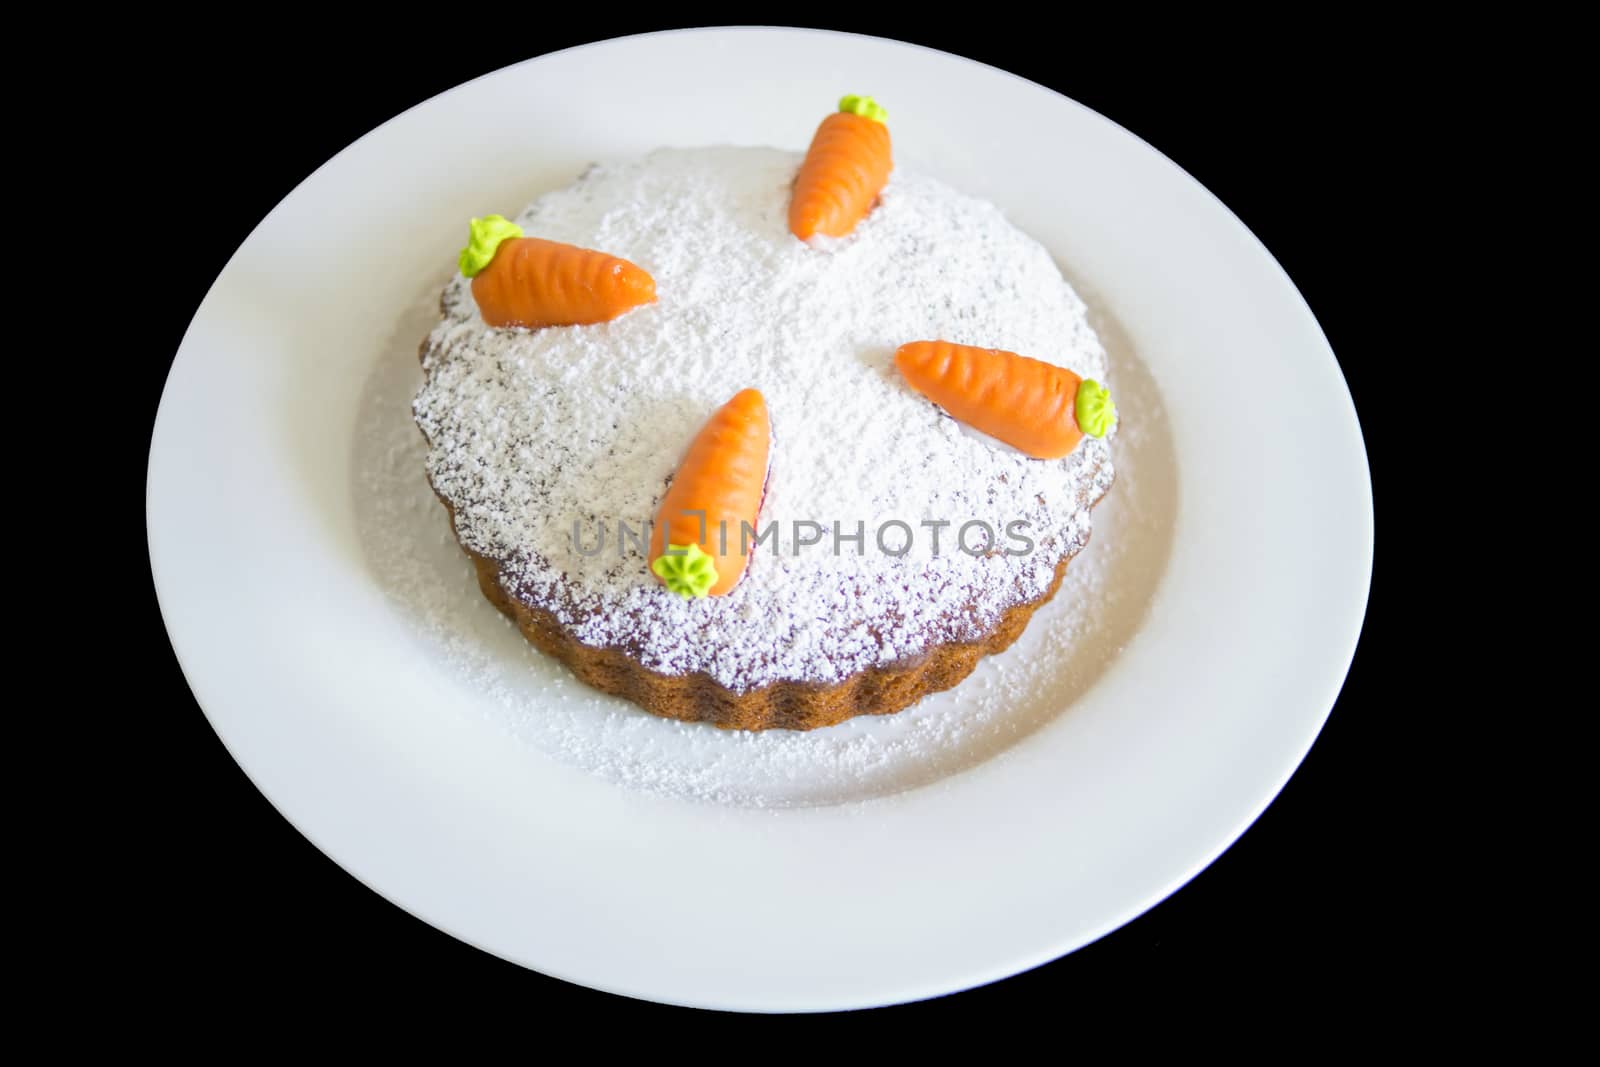 Carrot cake by Fr@nk